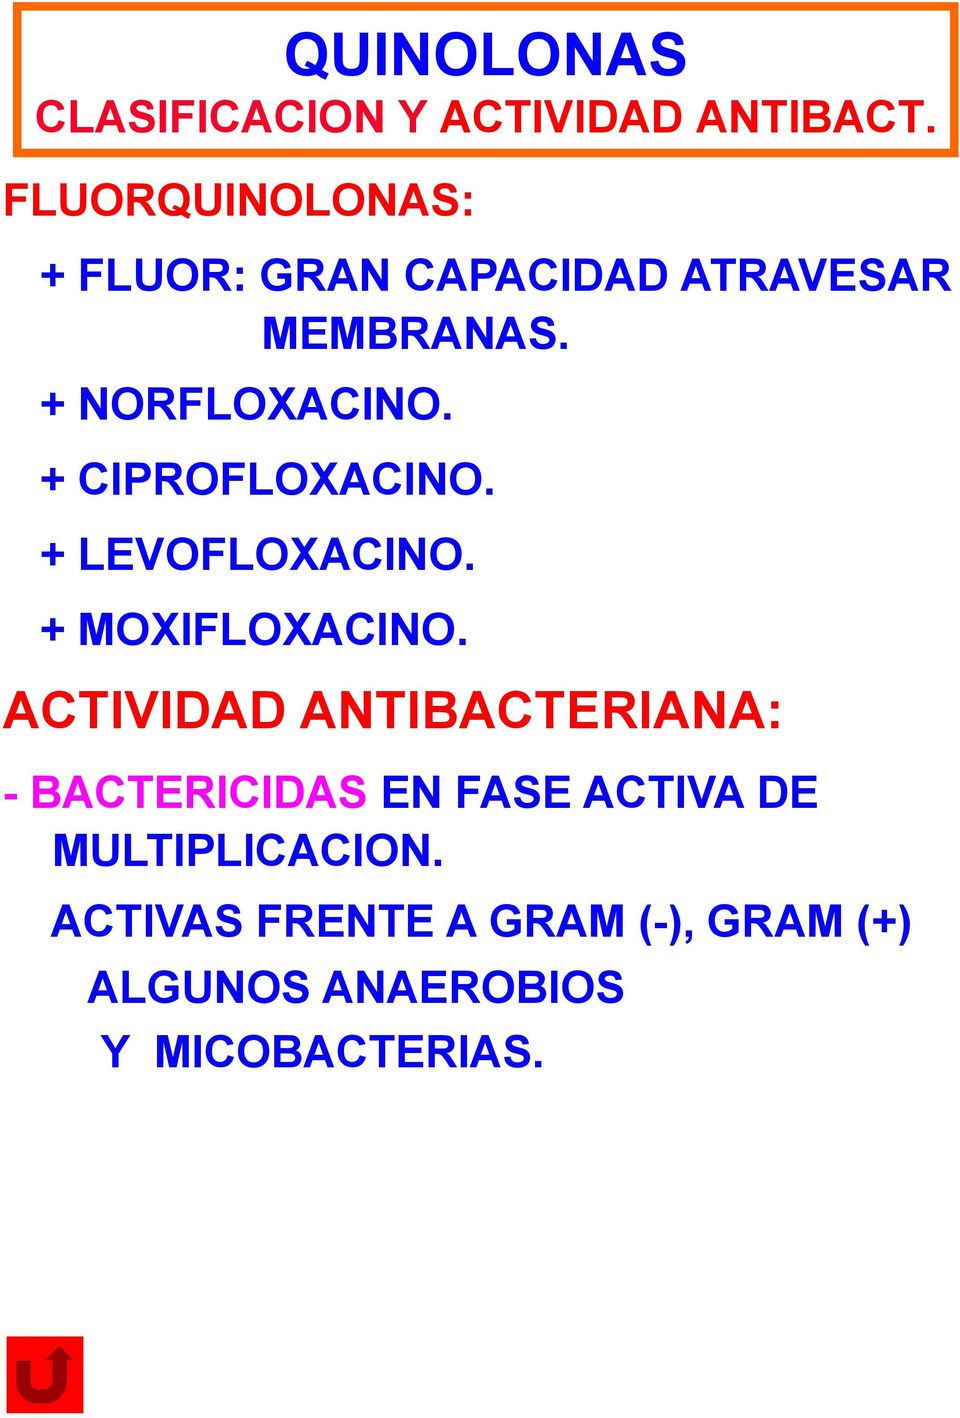 + CIPROFLOXACINO. + LEVOFLOXACINO. + MOXIFLOXACINO.